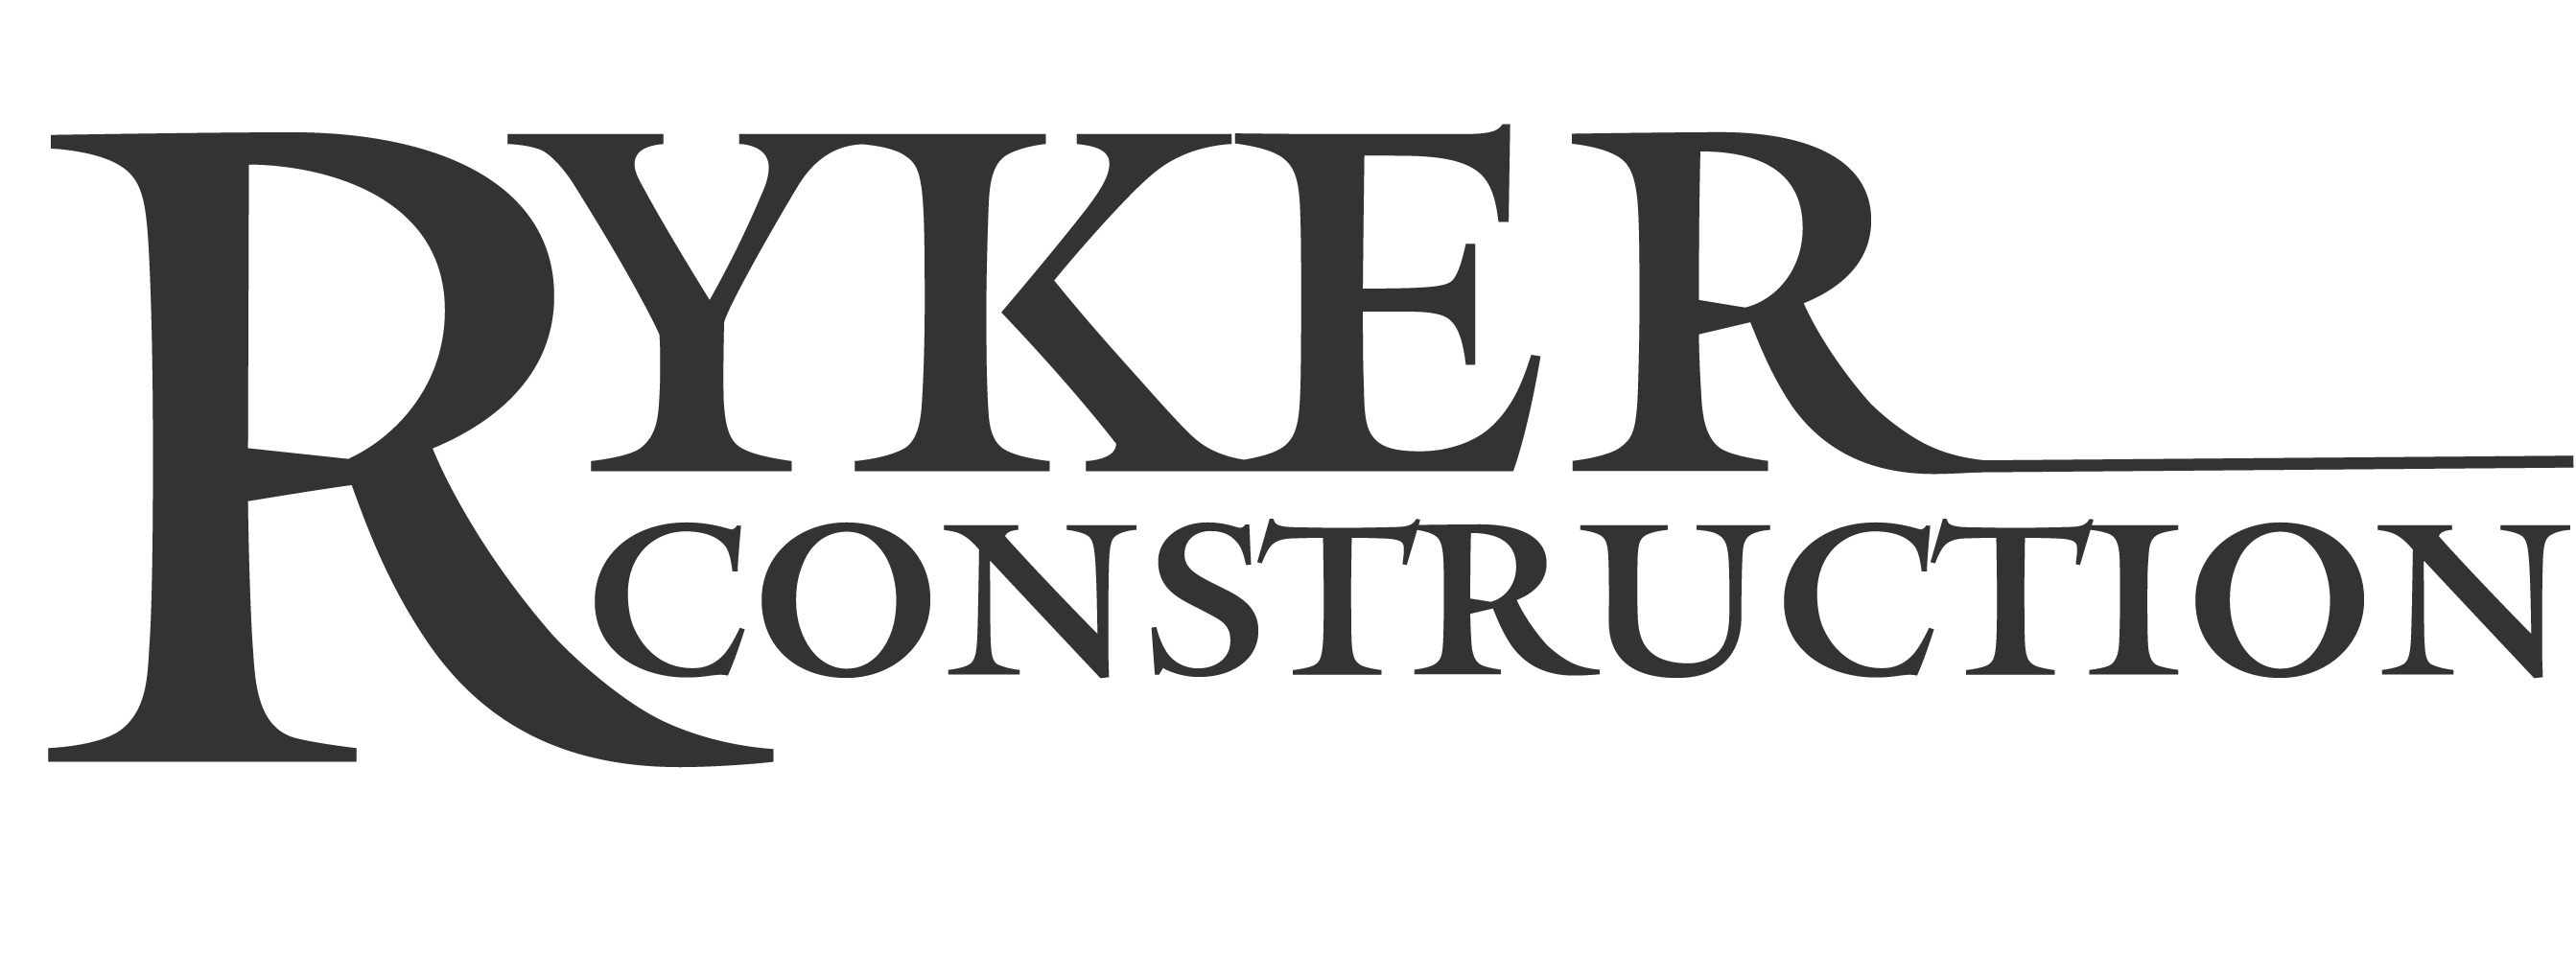 Ryker Construction